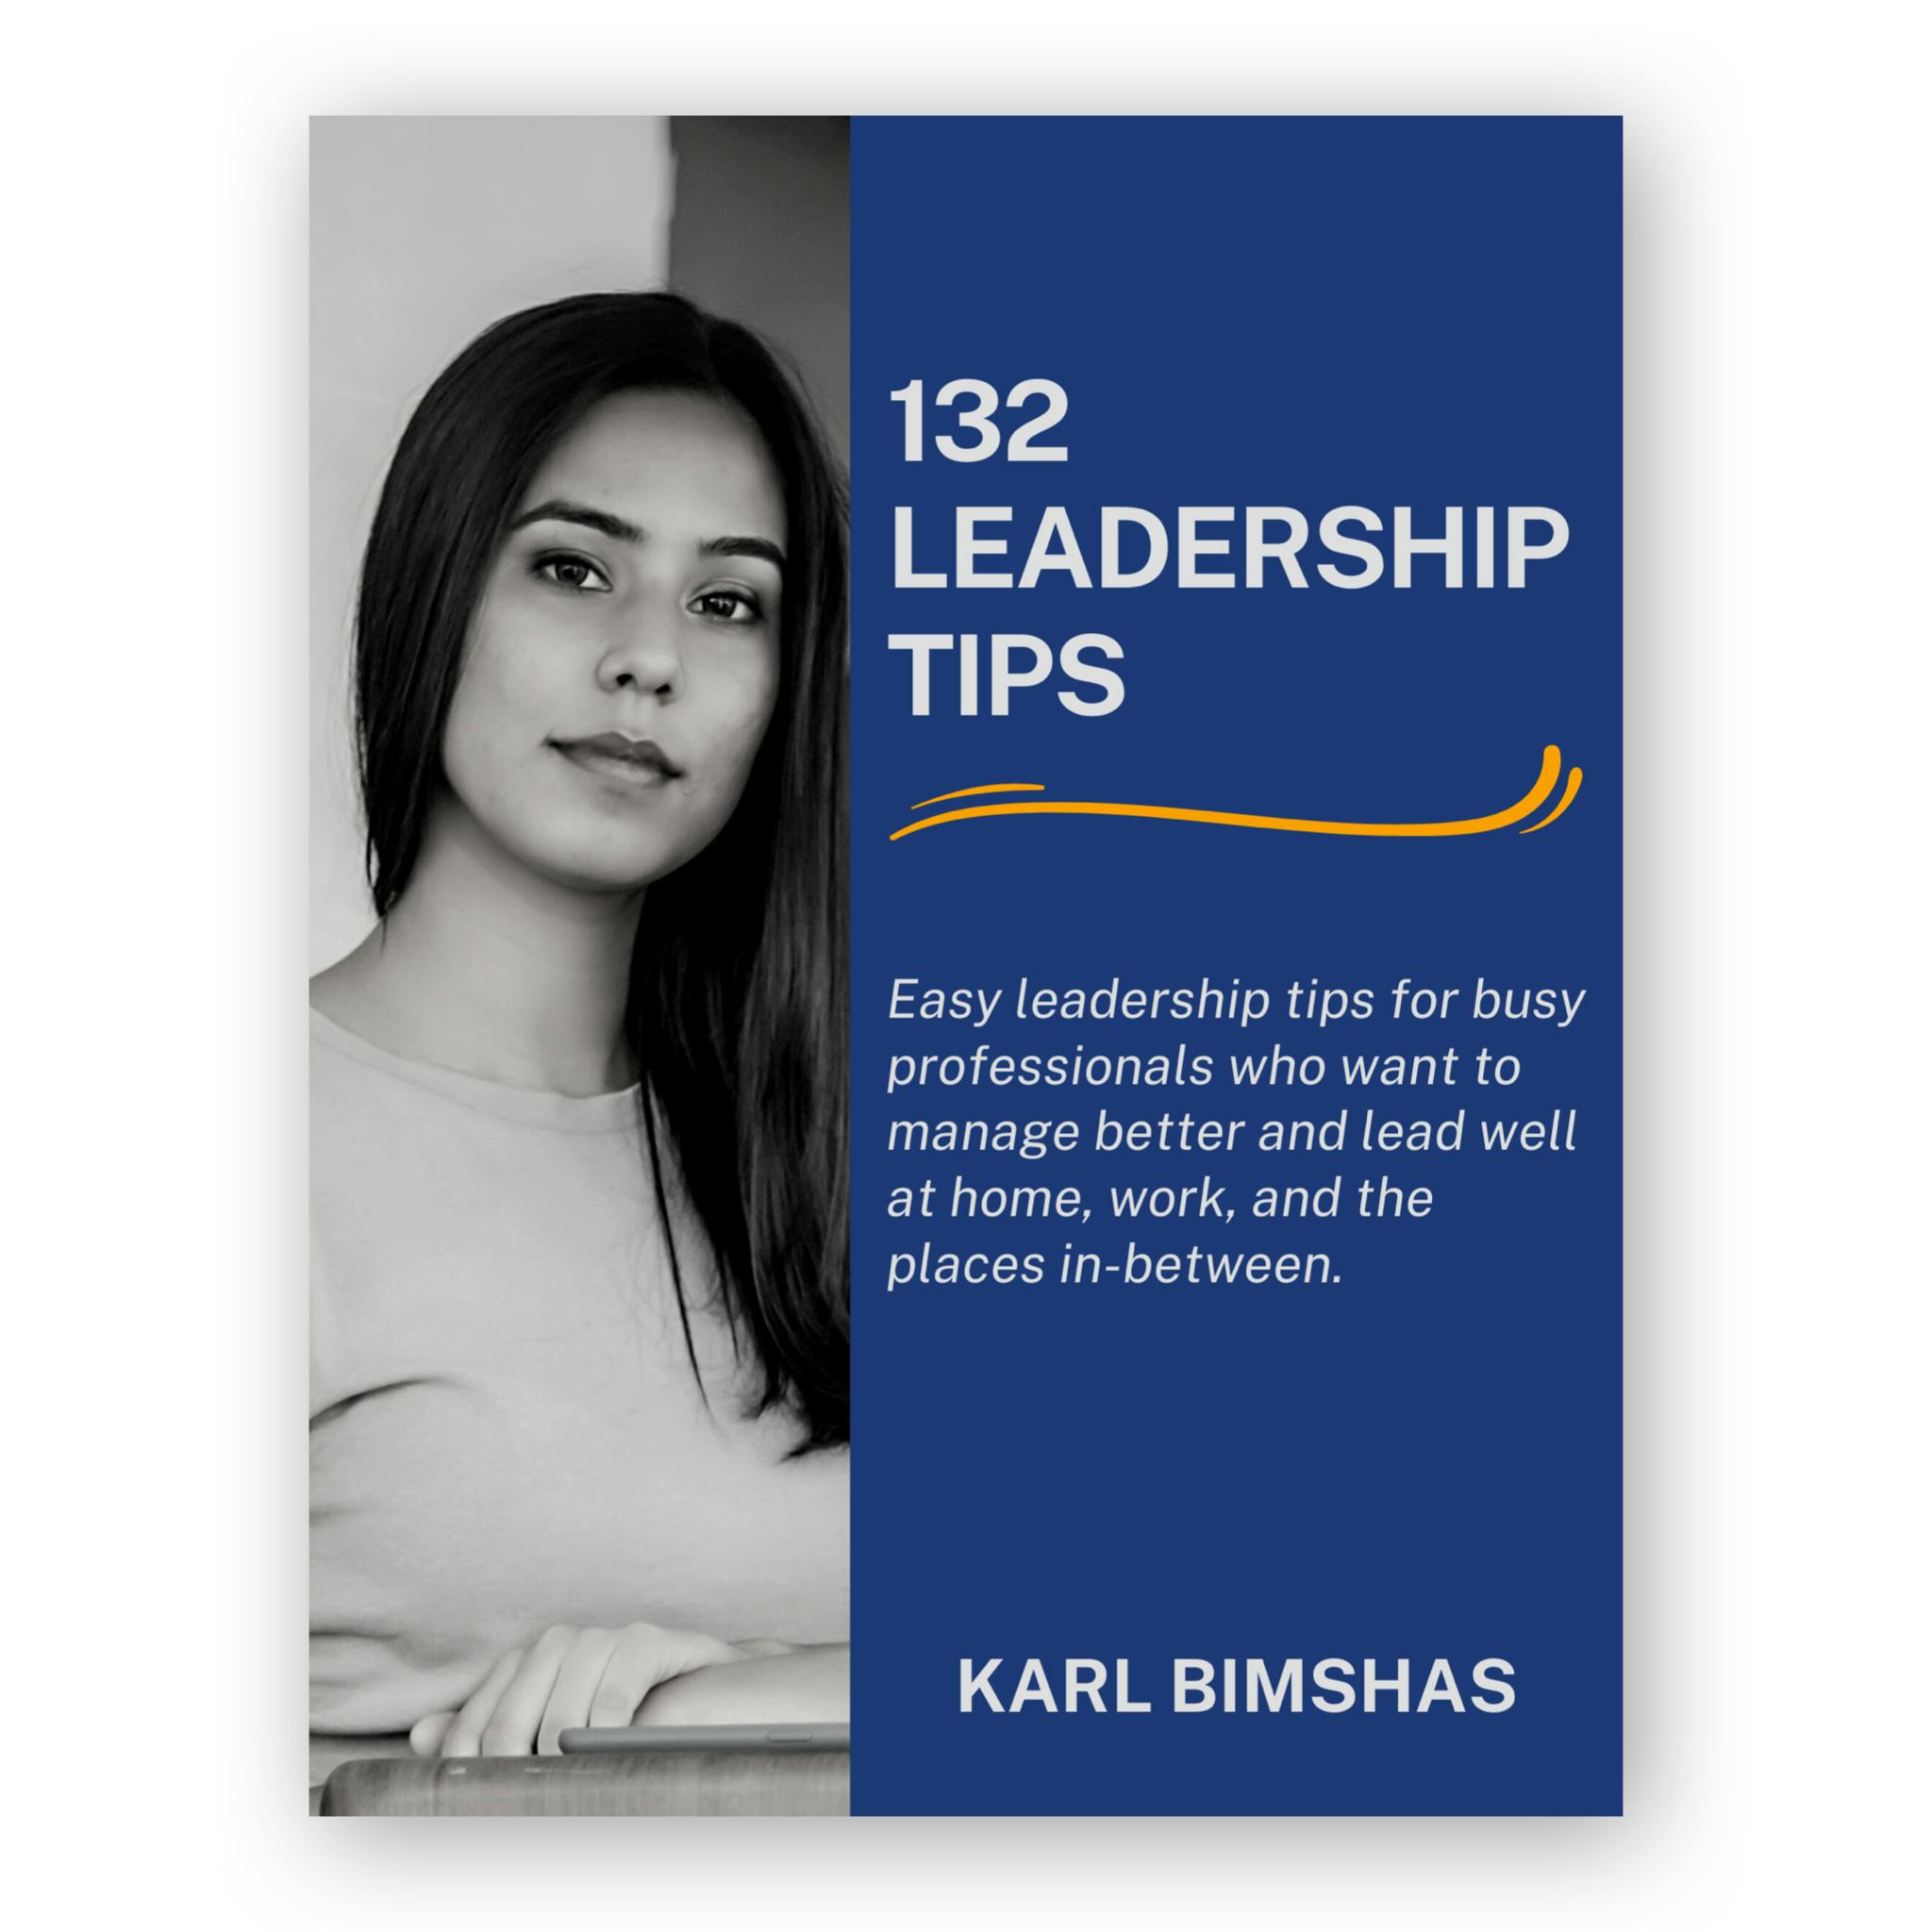 132 Leadership Tips by Karl Bimshas